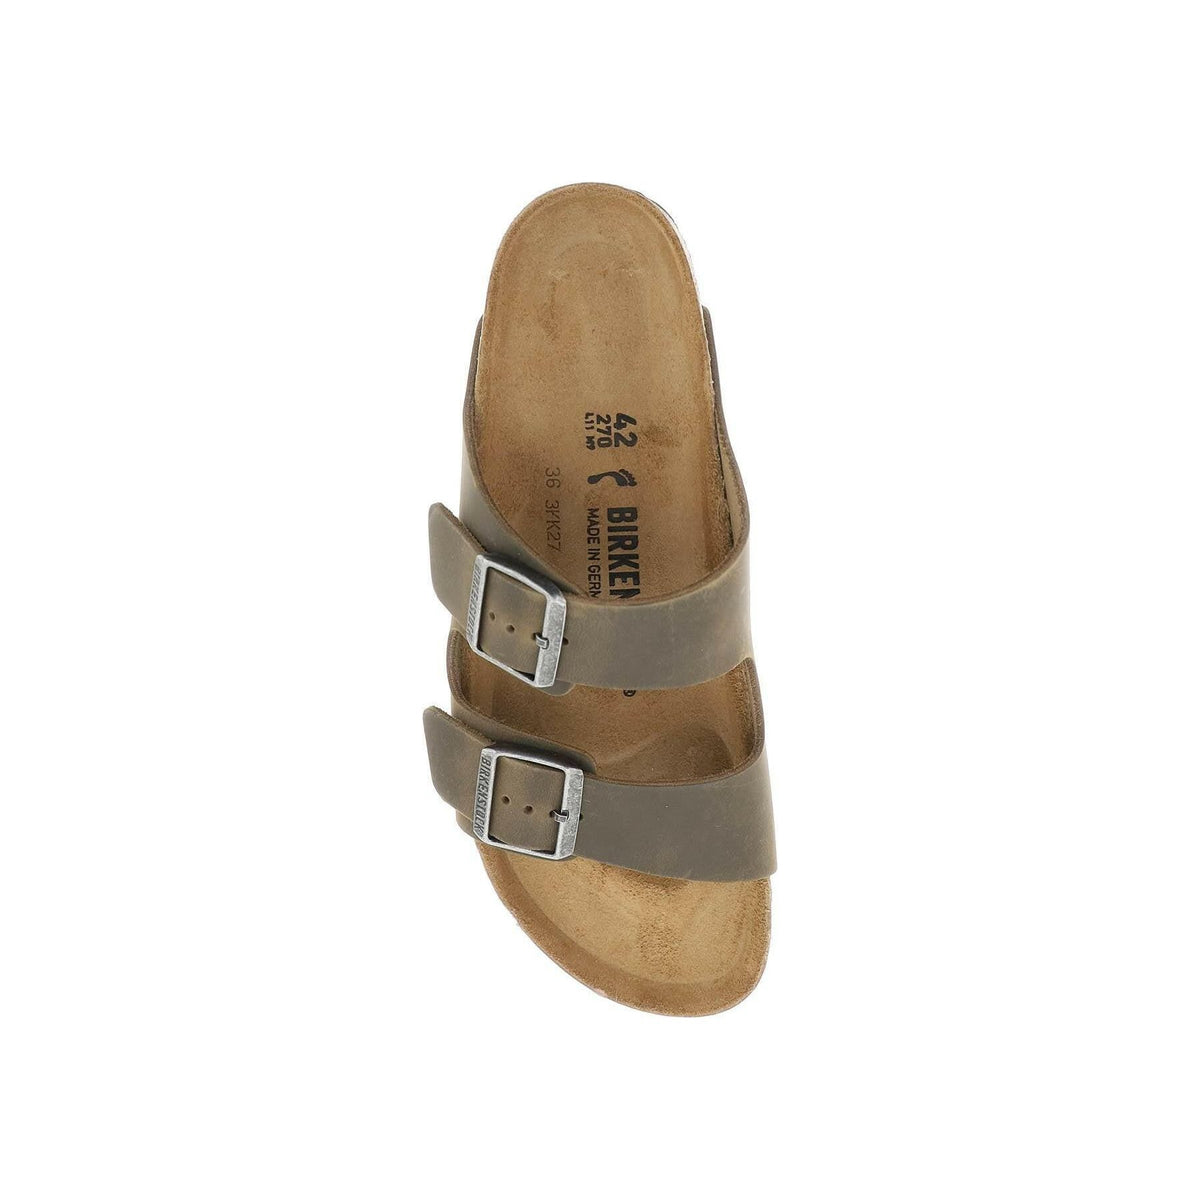 Arizona Birko-Flor Two-Strap Narrow Fit Sandals